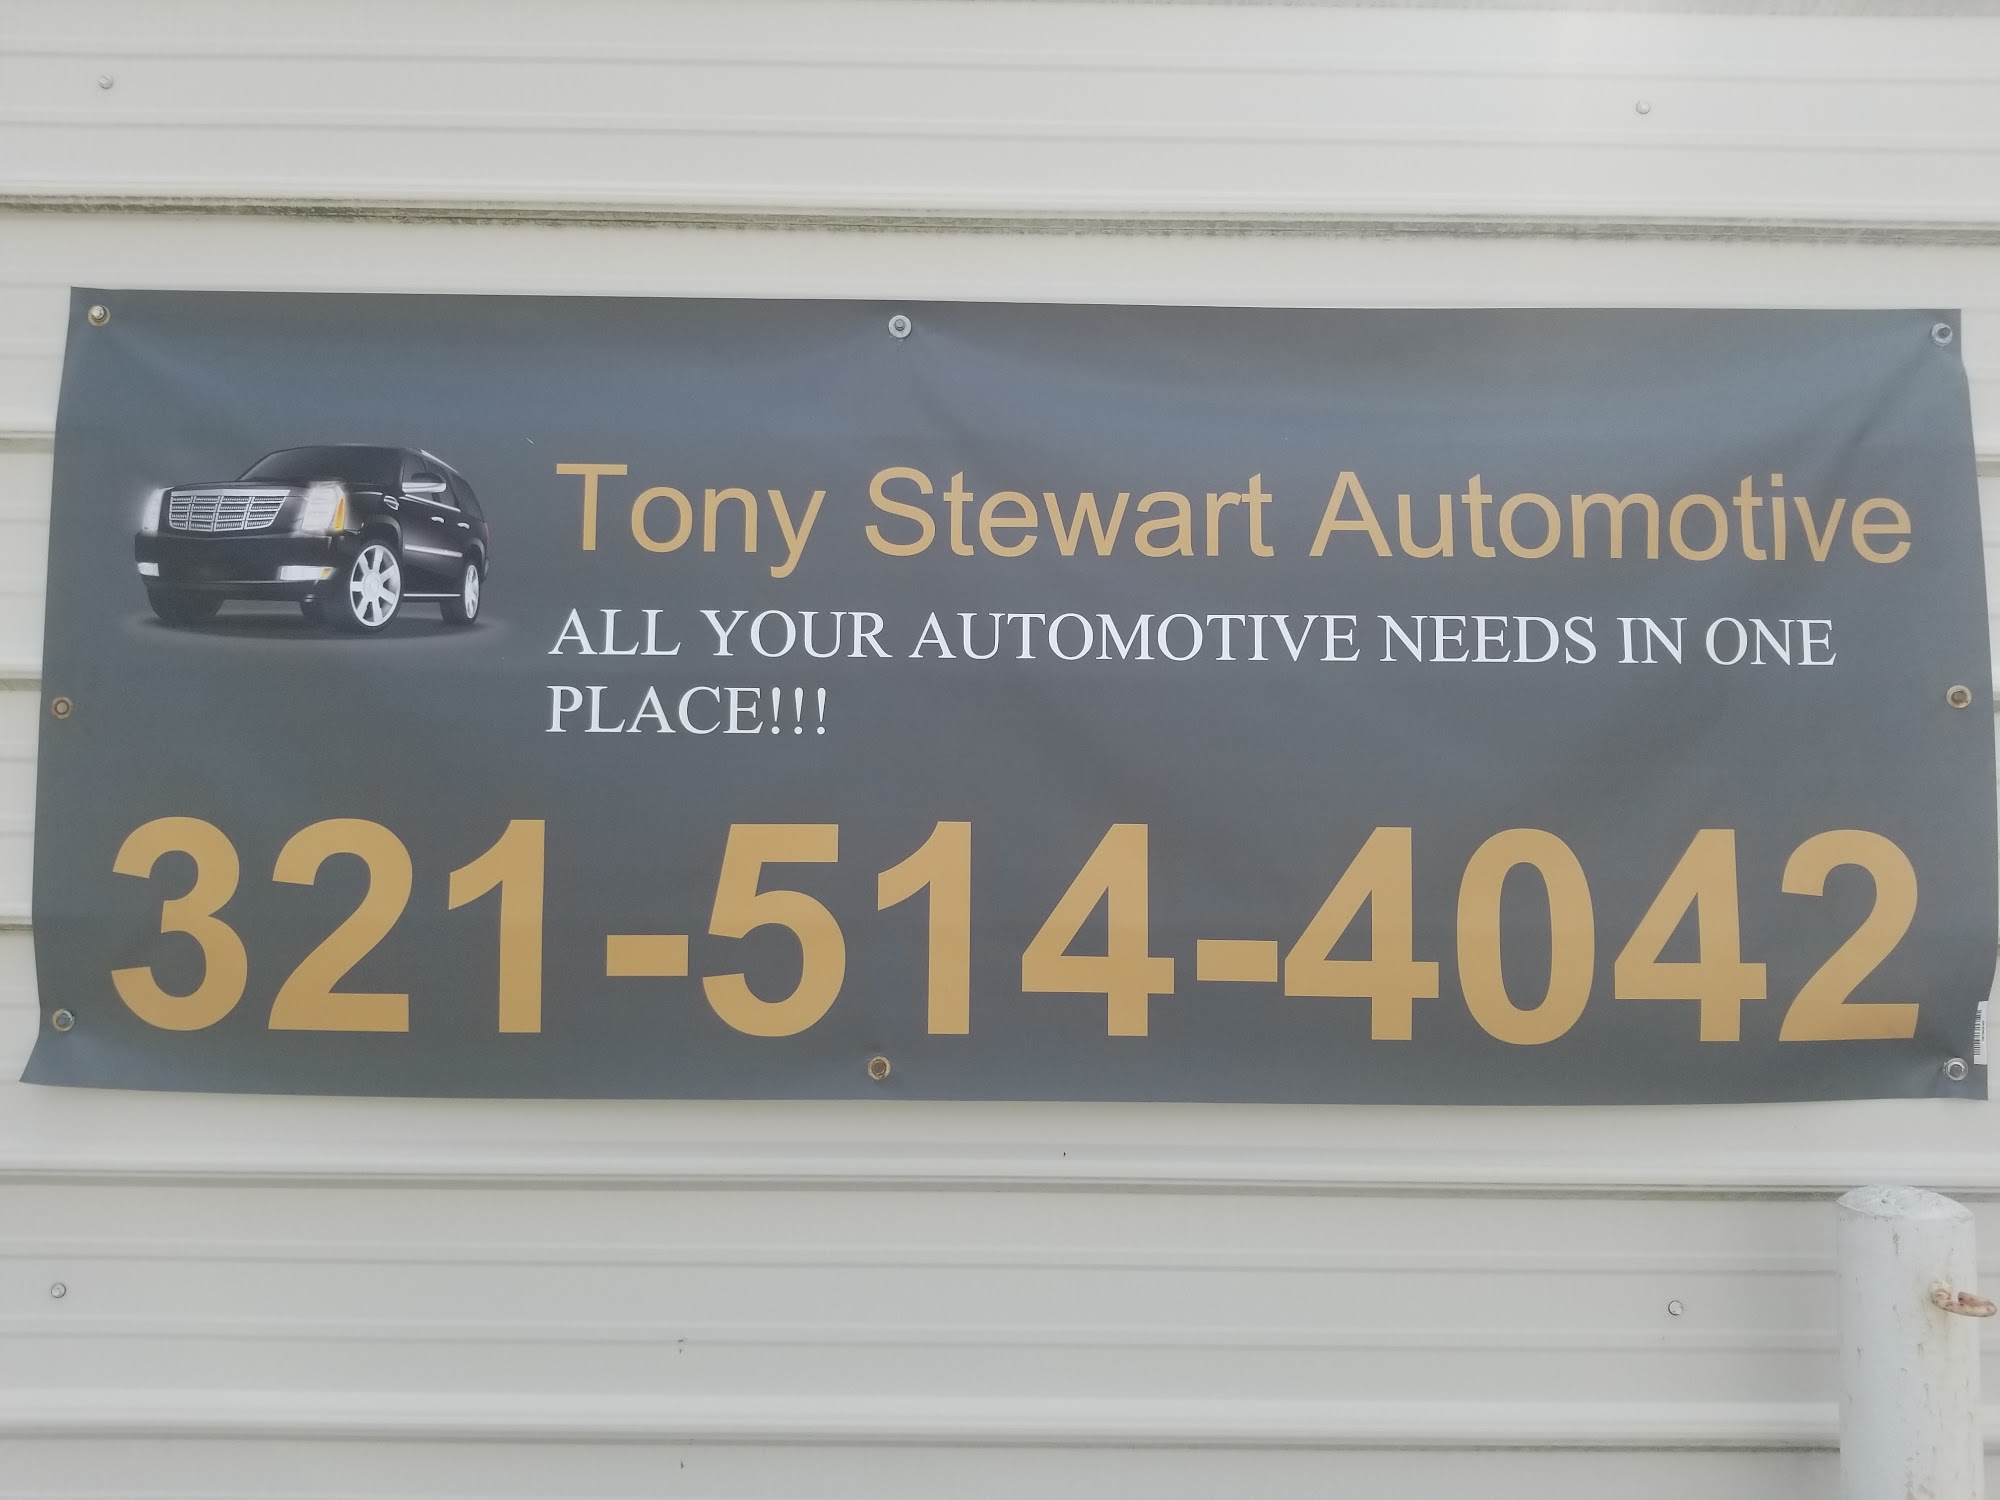 Tony Stewart Automotive